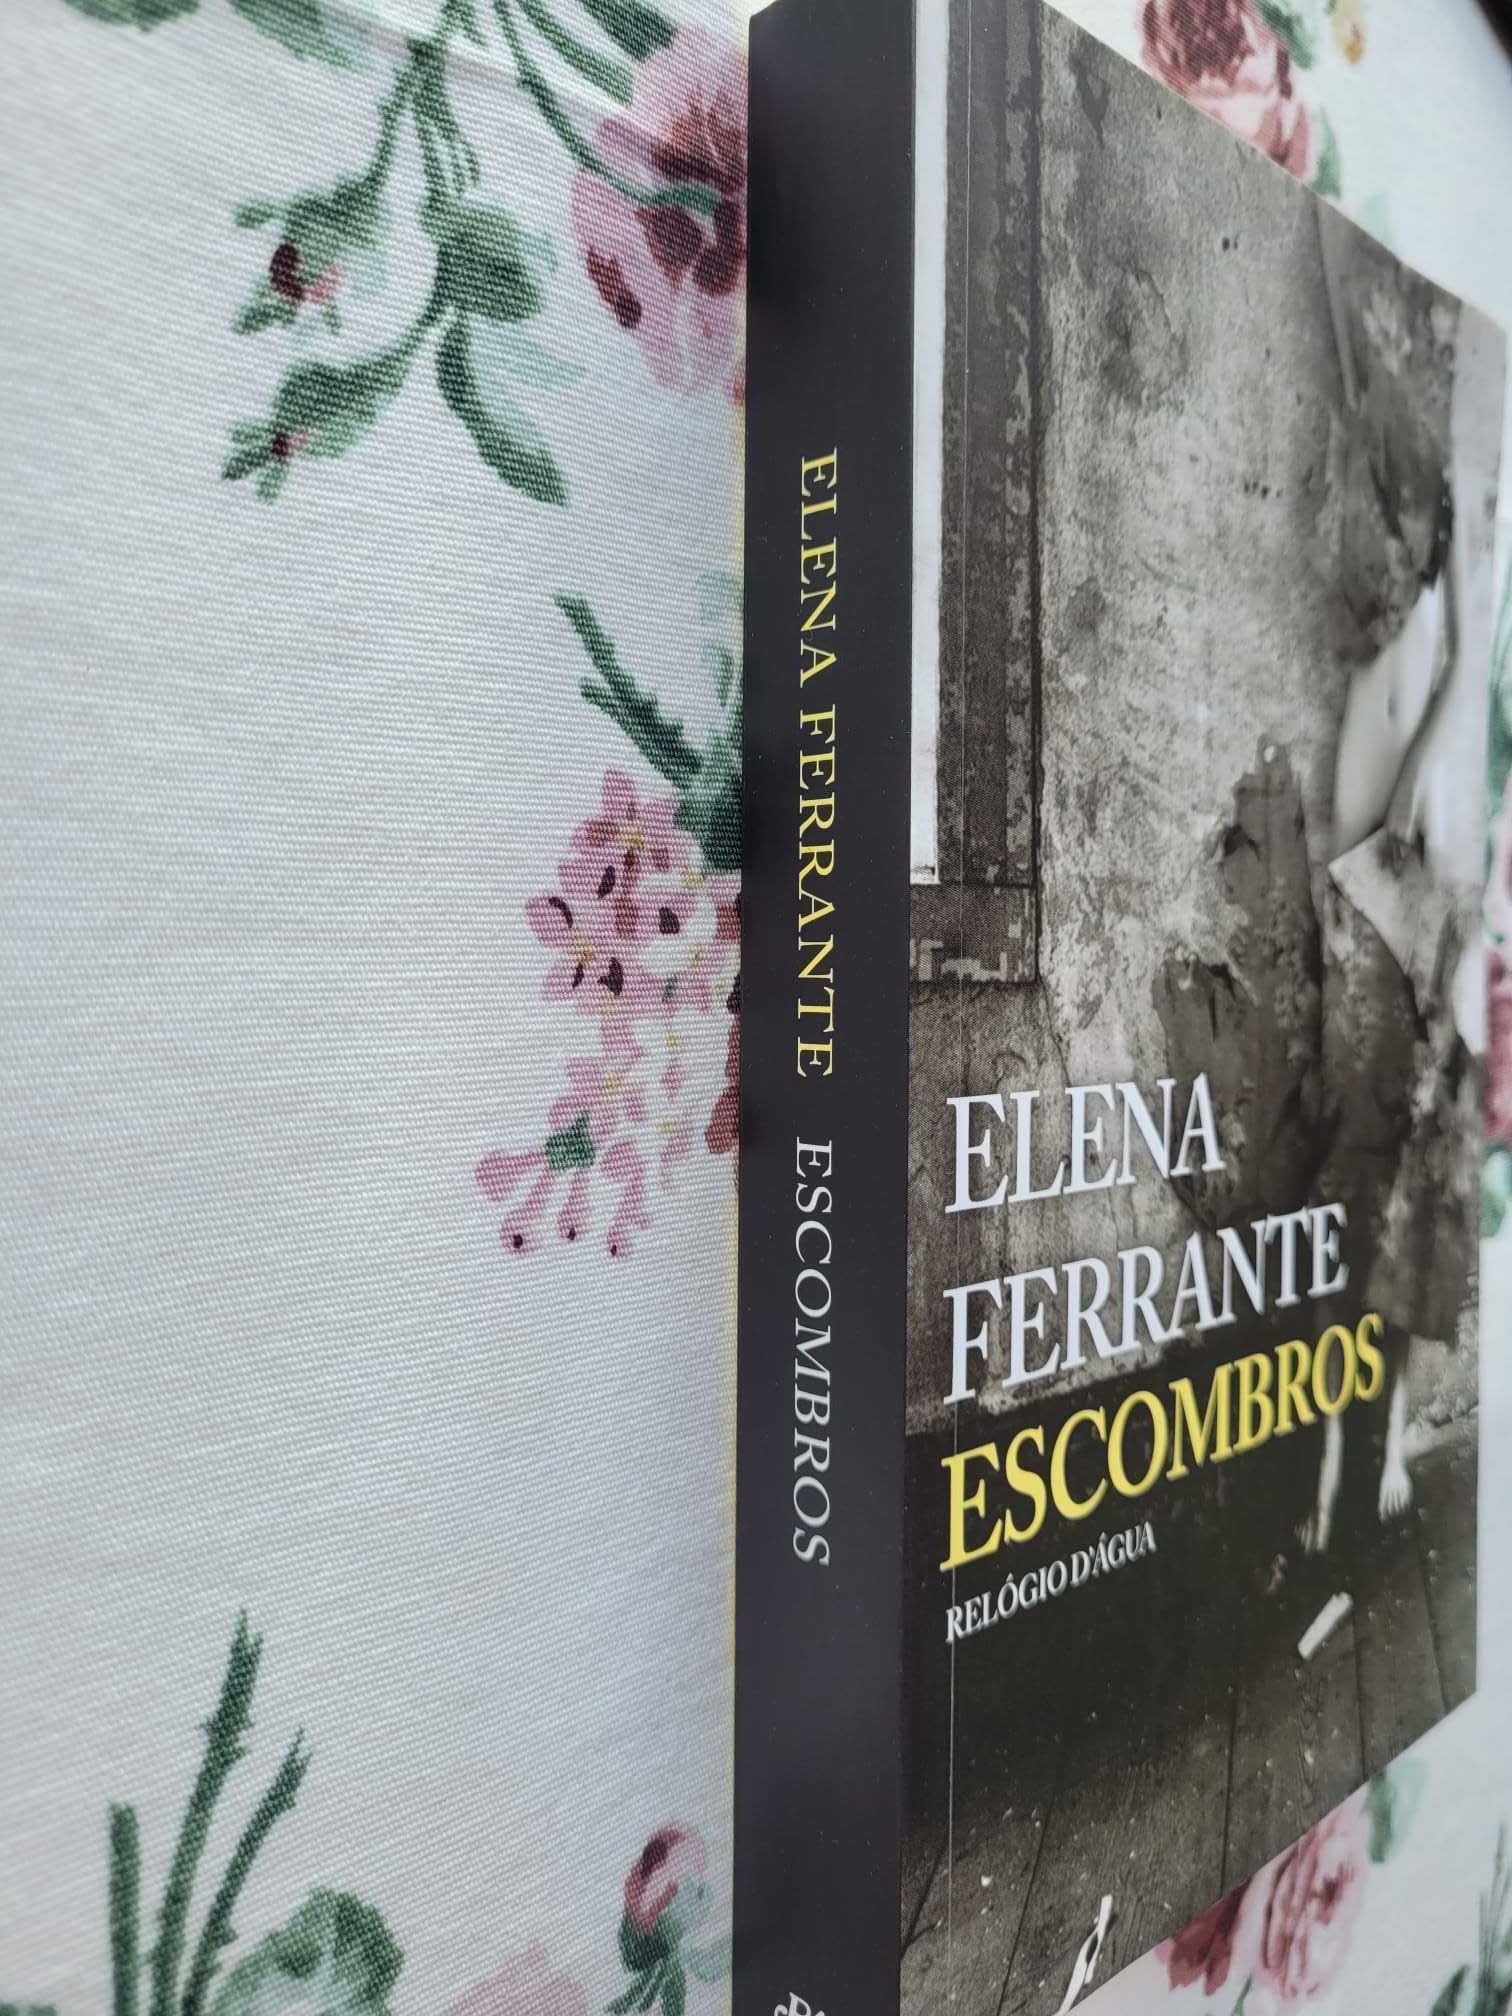 Livro "Escombros" de Elena Ferrante - NOVO